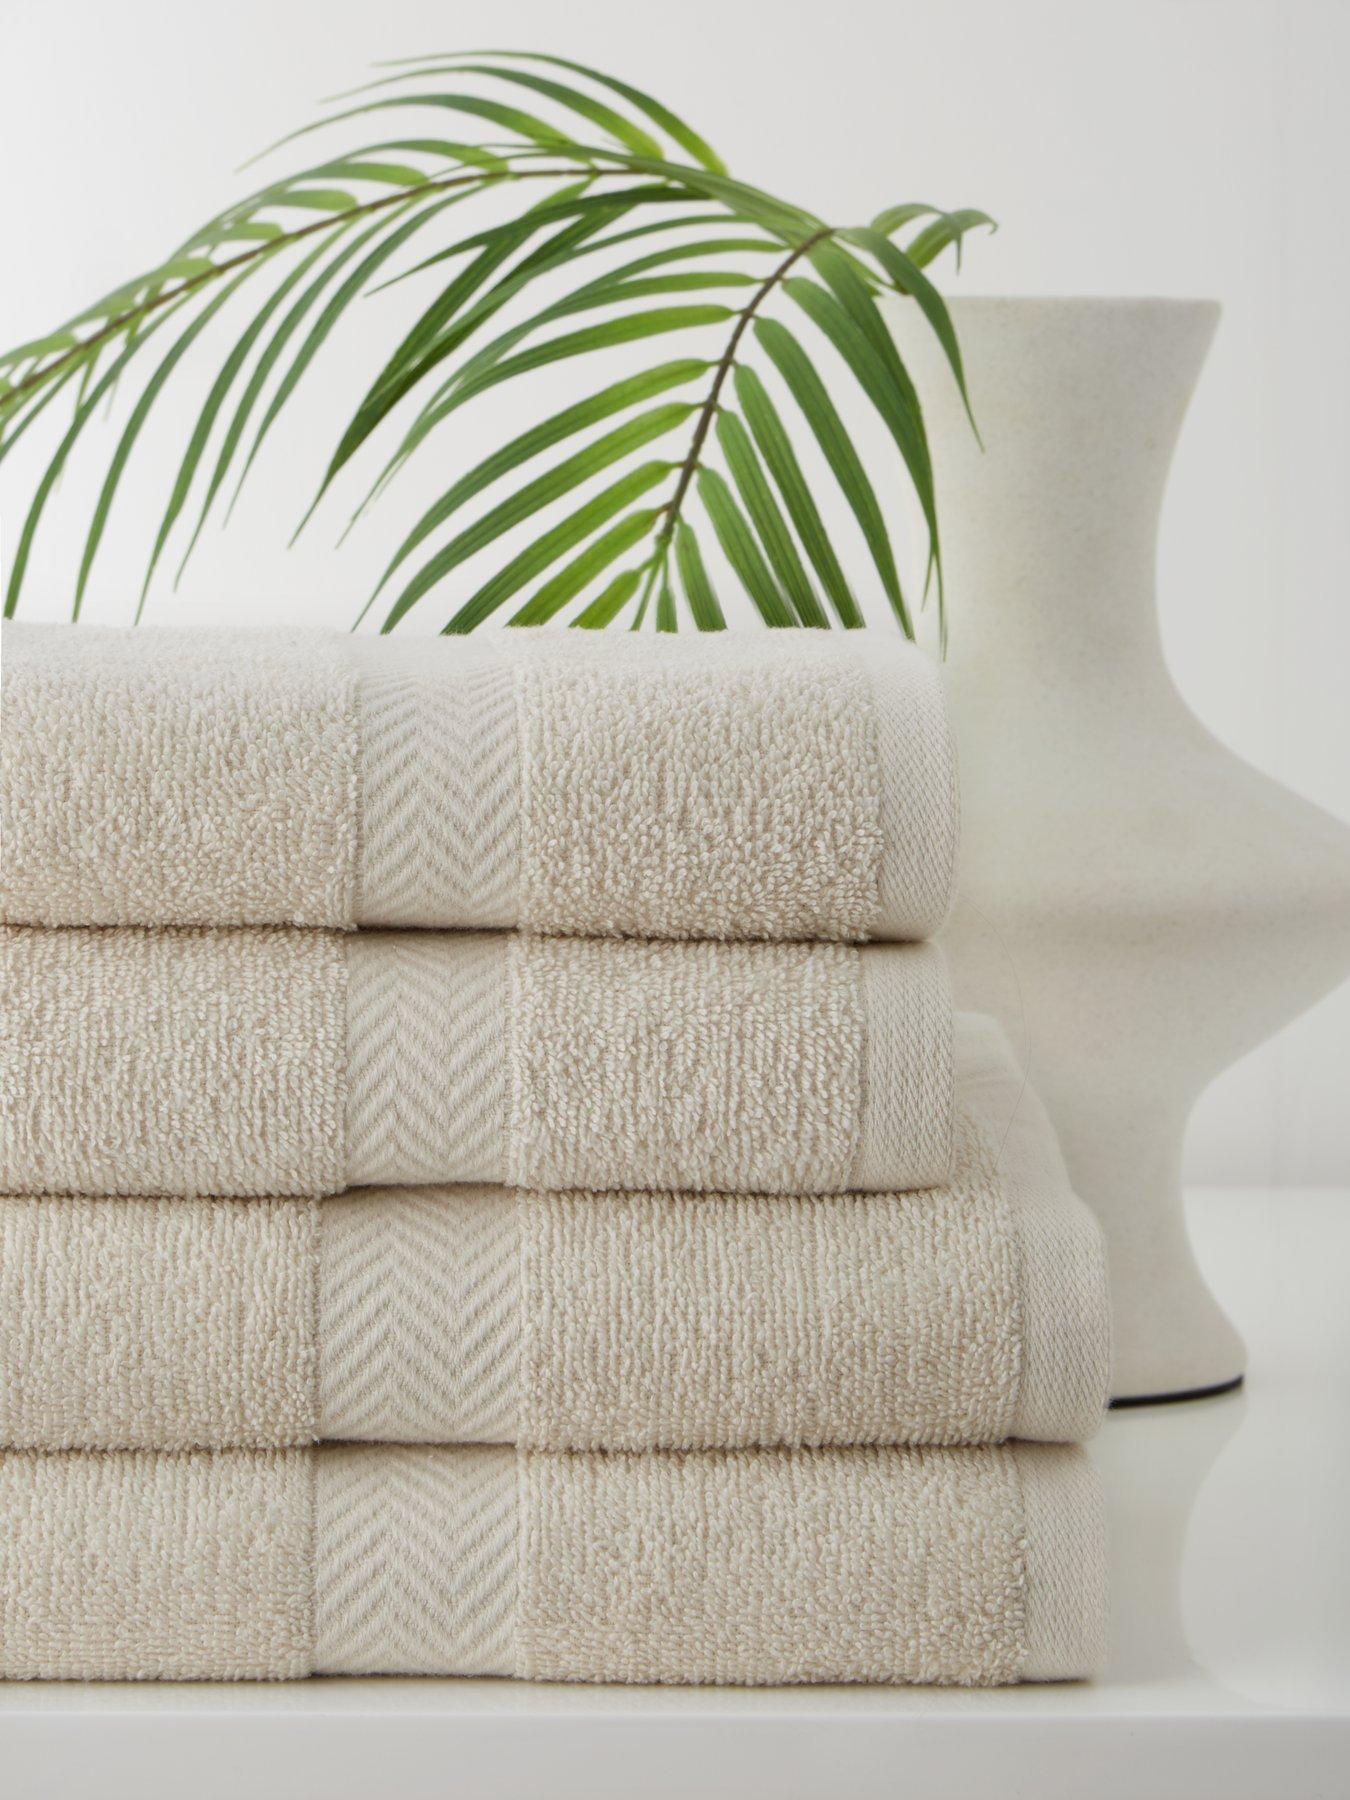 Sand Cloud Beach Towel - Sand Free - 100% Organic Turkish Cotton Yarn -  Quick Dry Towel for Beach, Picnic, Blanket or Bath - As Seen on Shark Tank  - The Us Mint : : Home